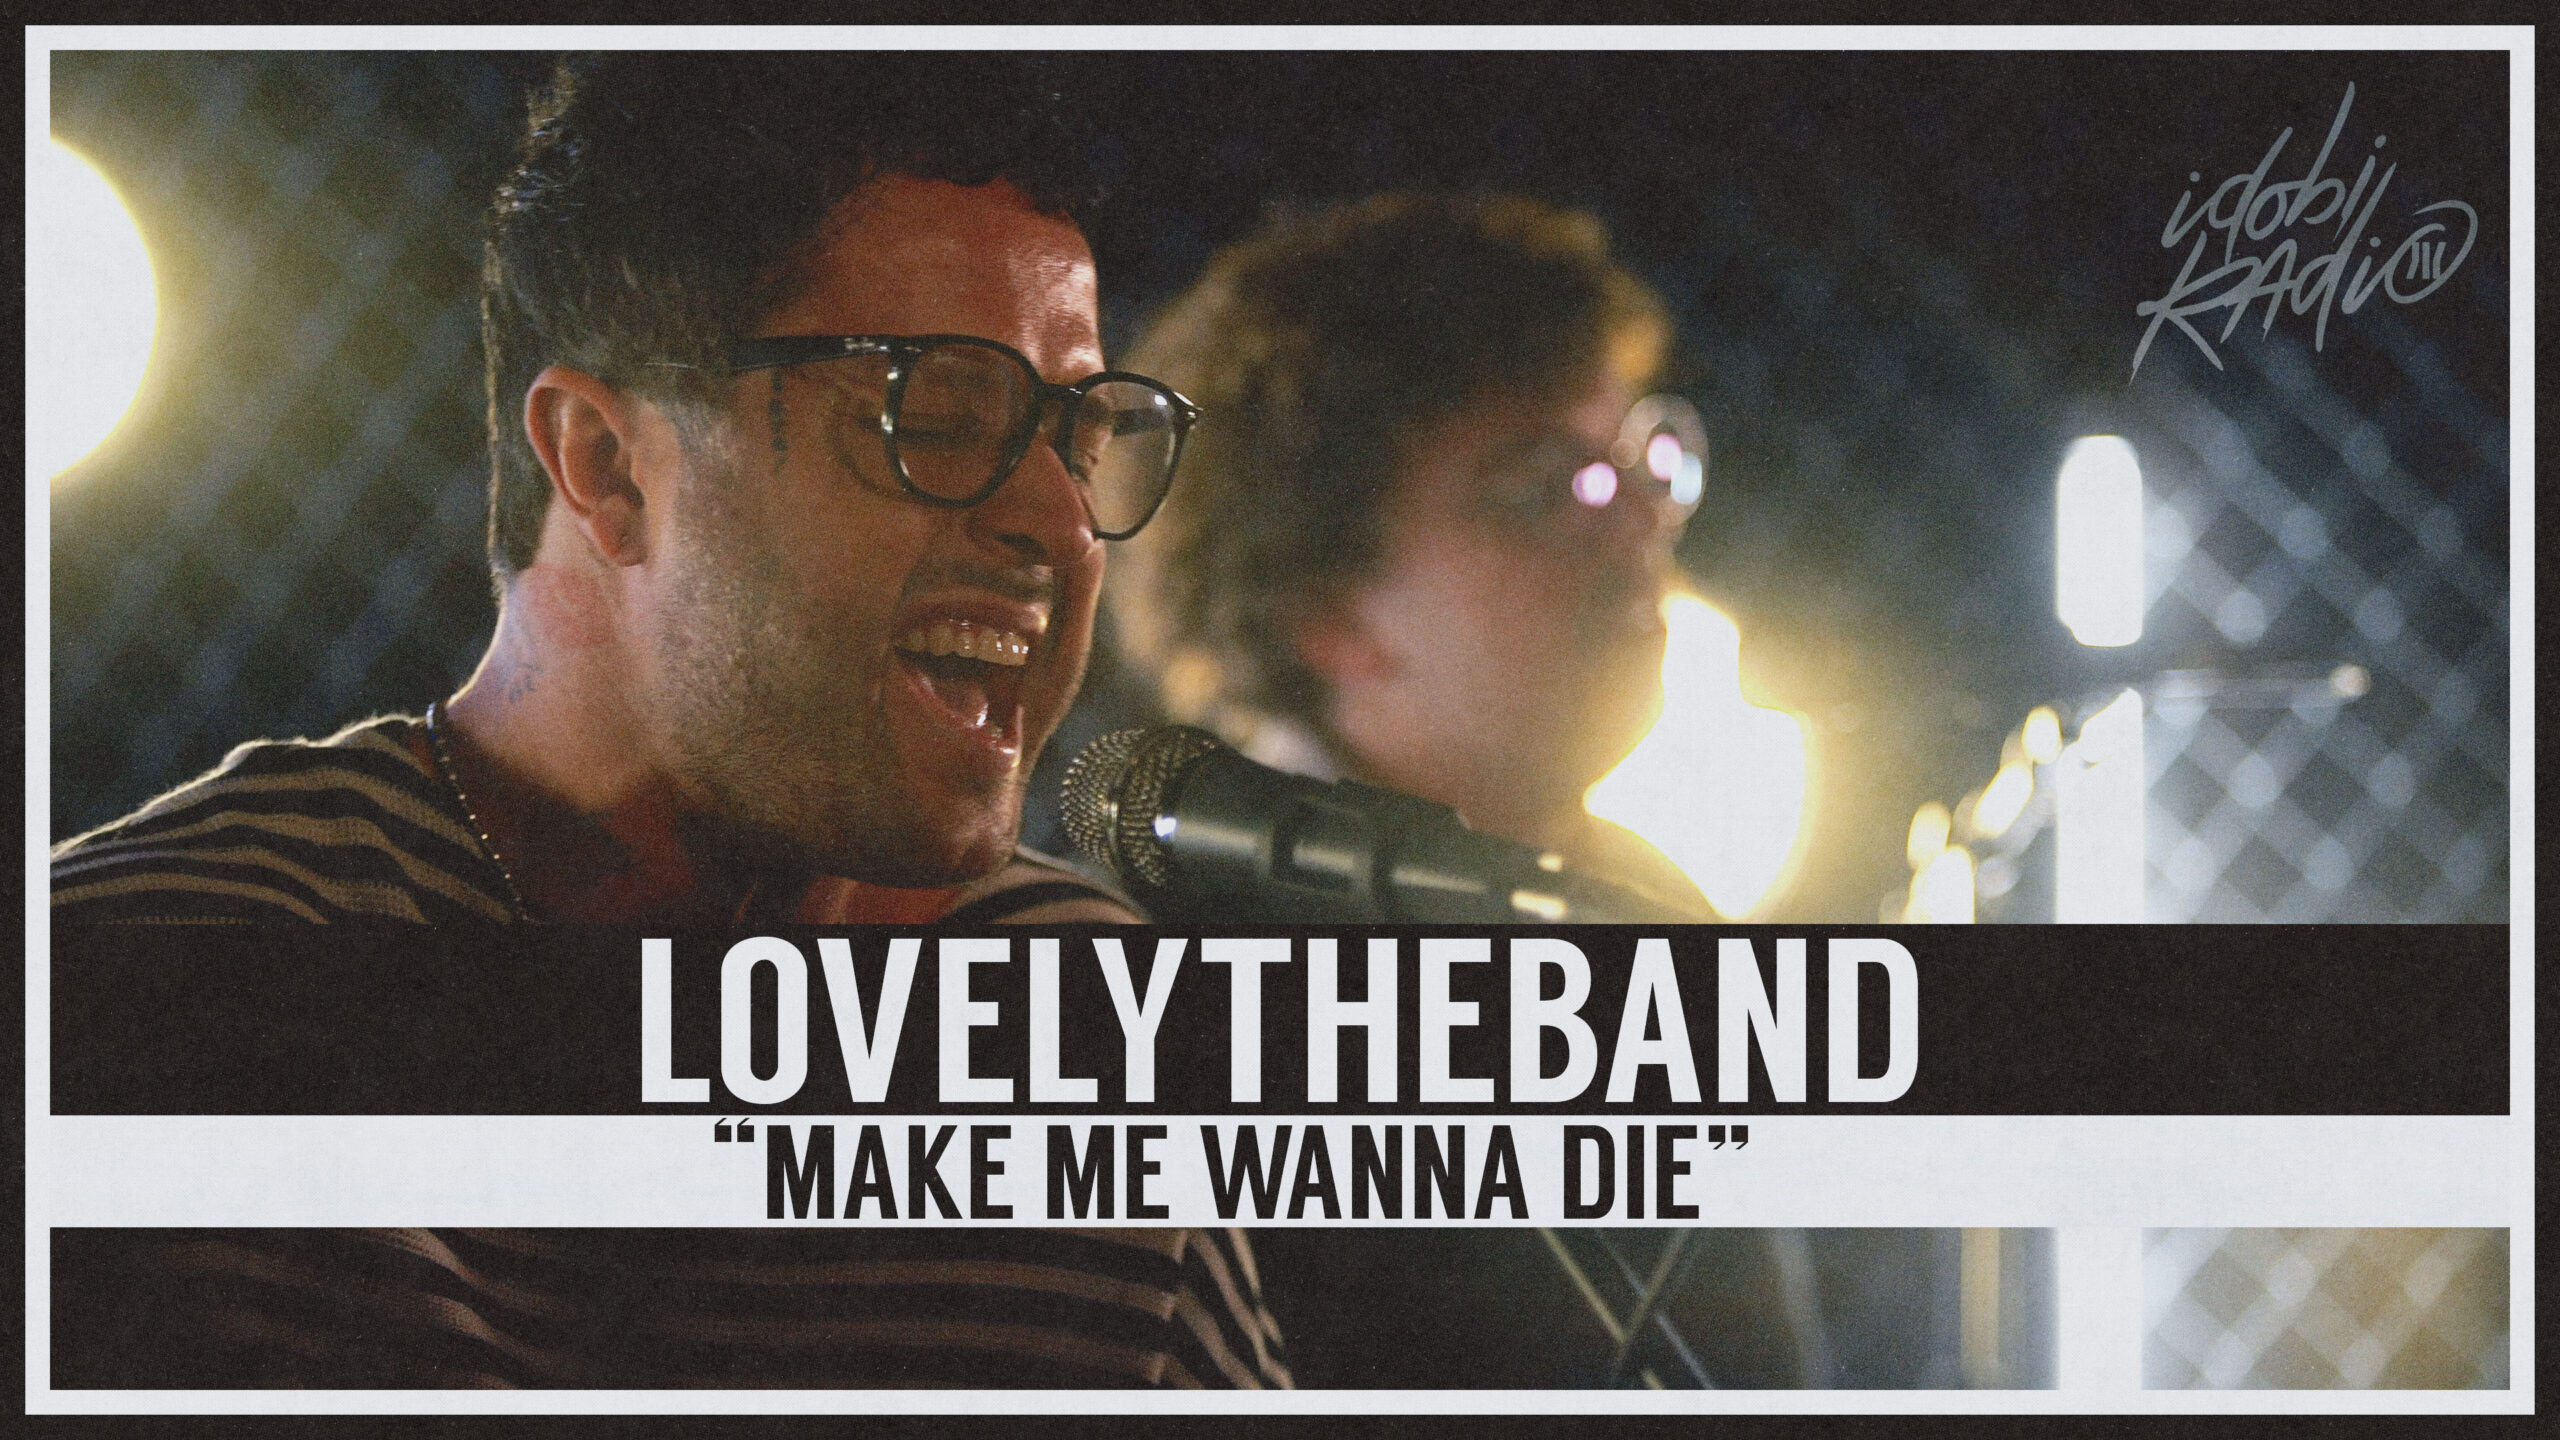 lovelytheband perform "Make Me Wanna Die" live at the idobi Studios